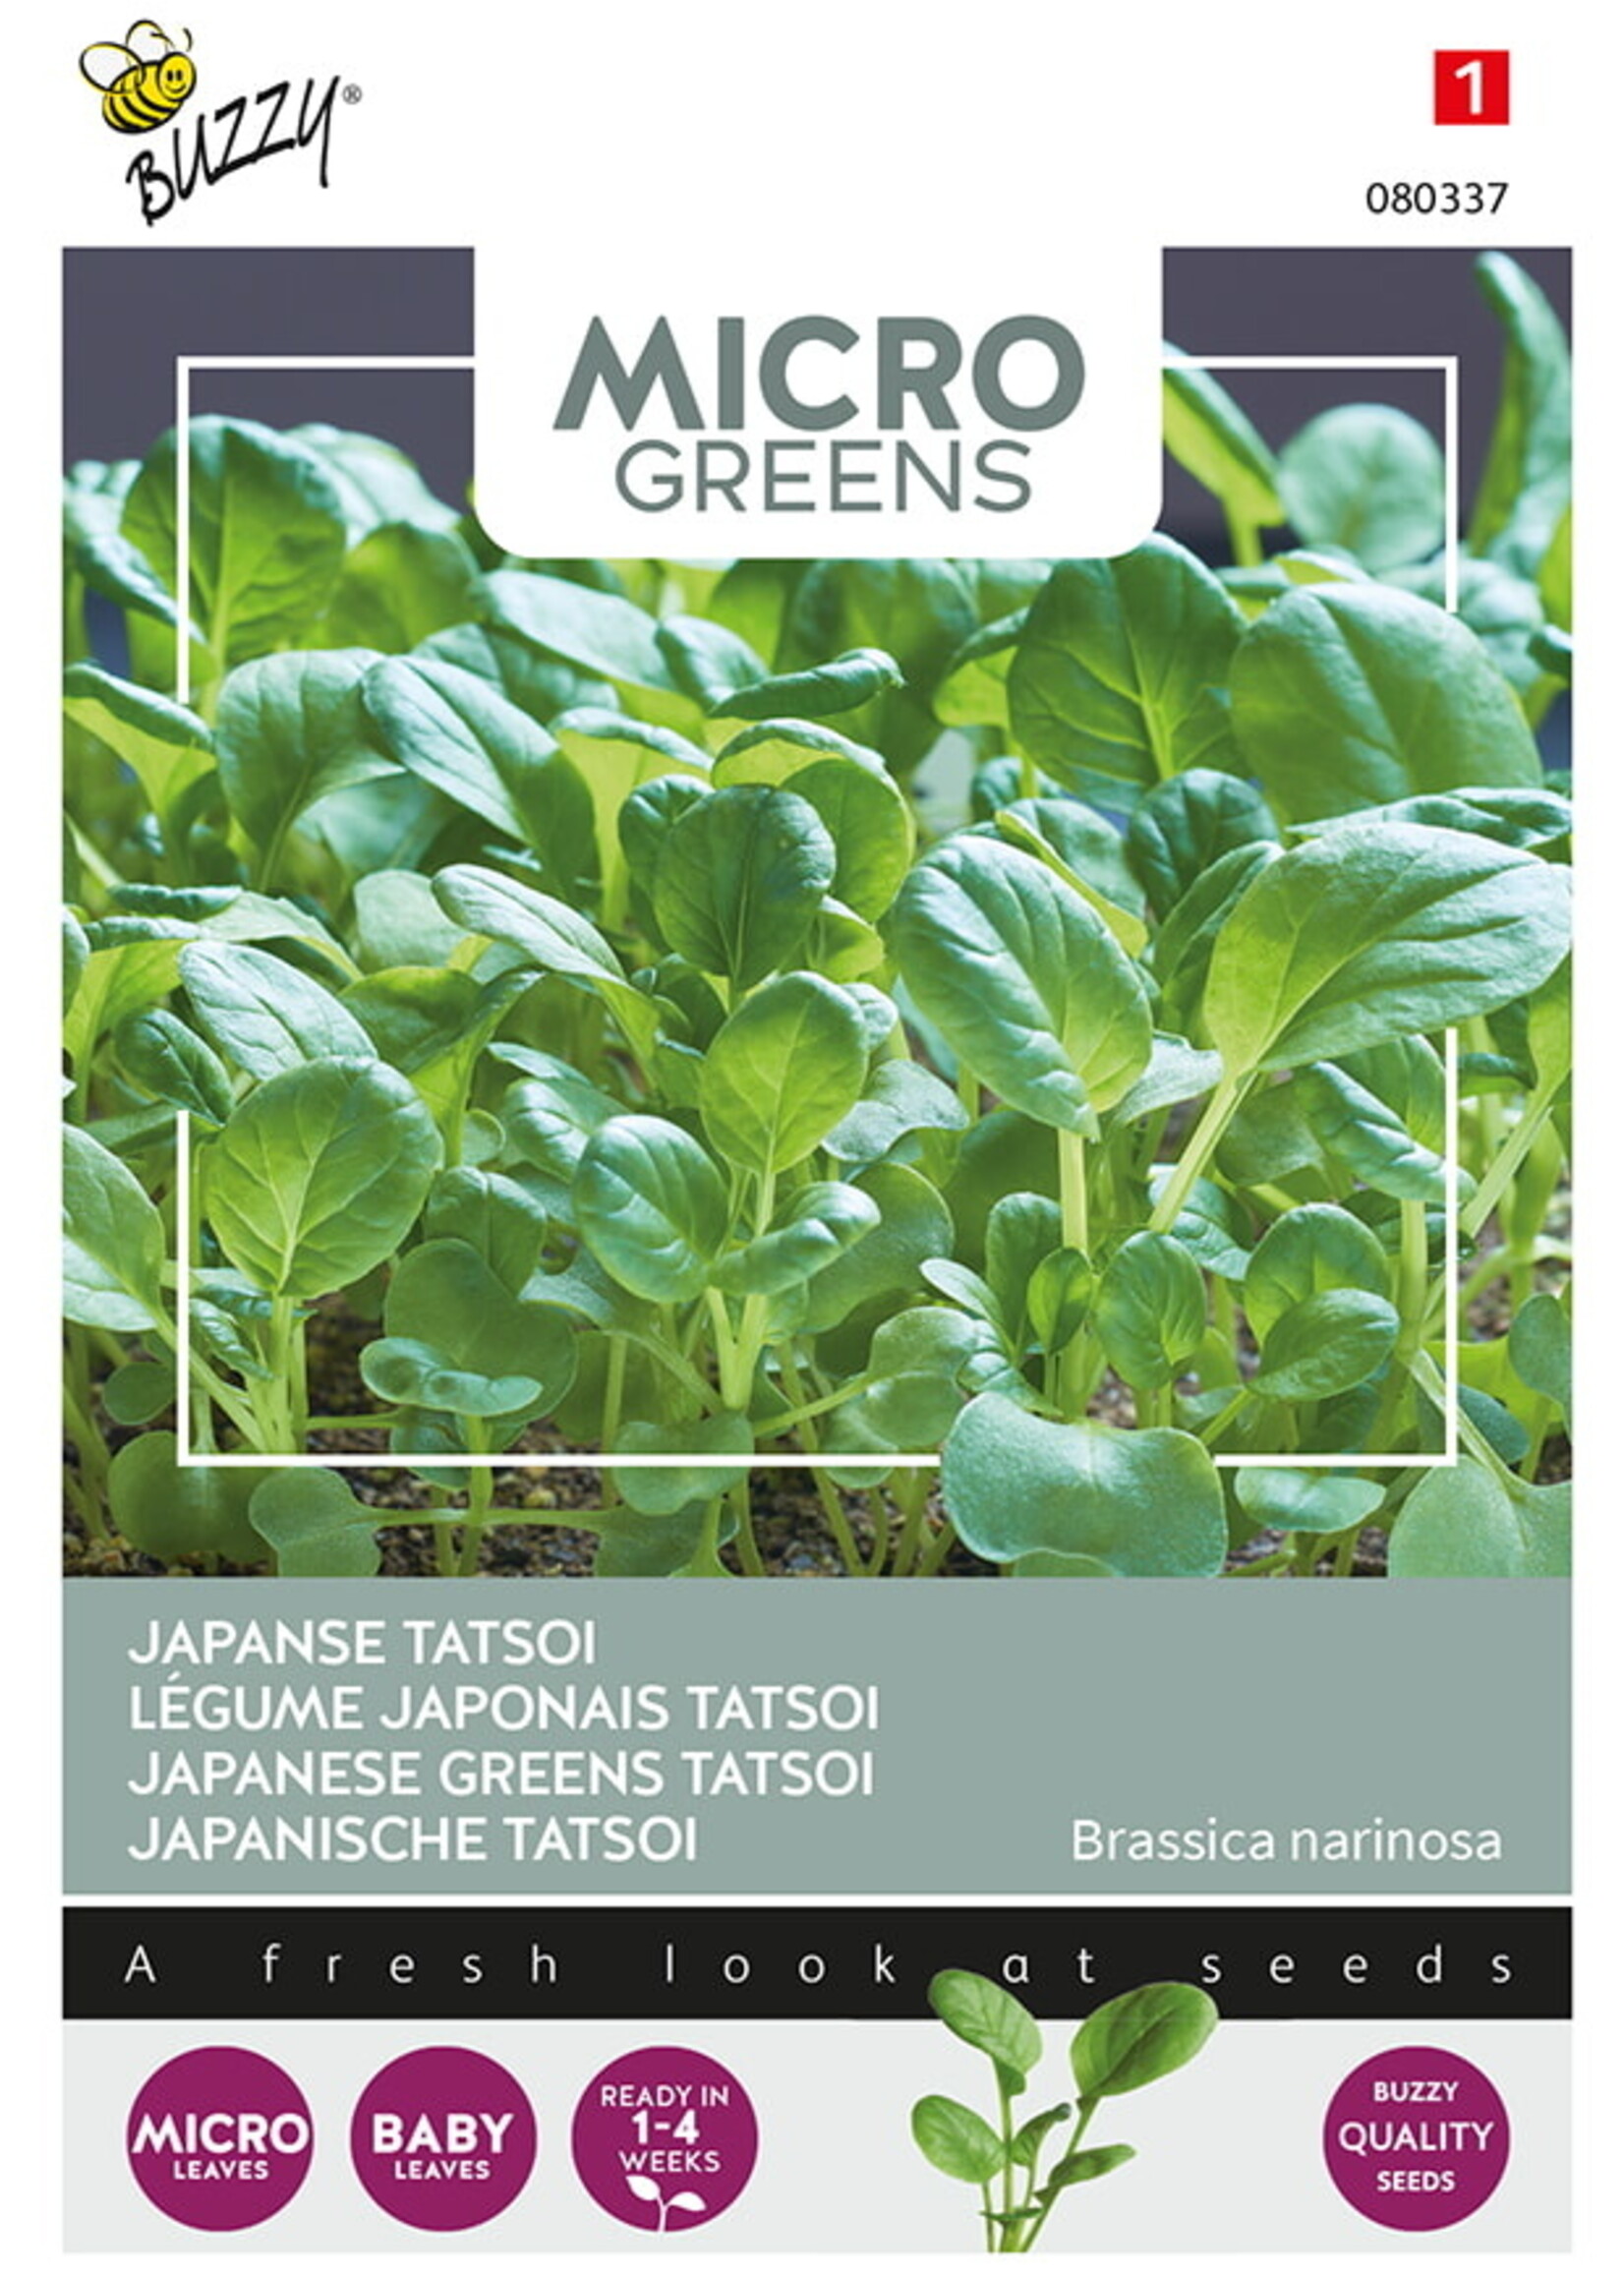 Buzzy  Microgreens Tatsoi